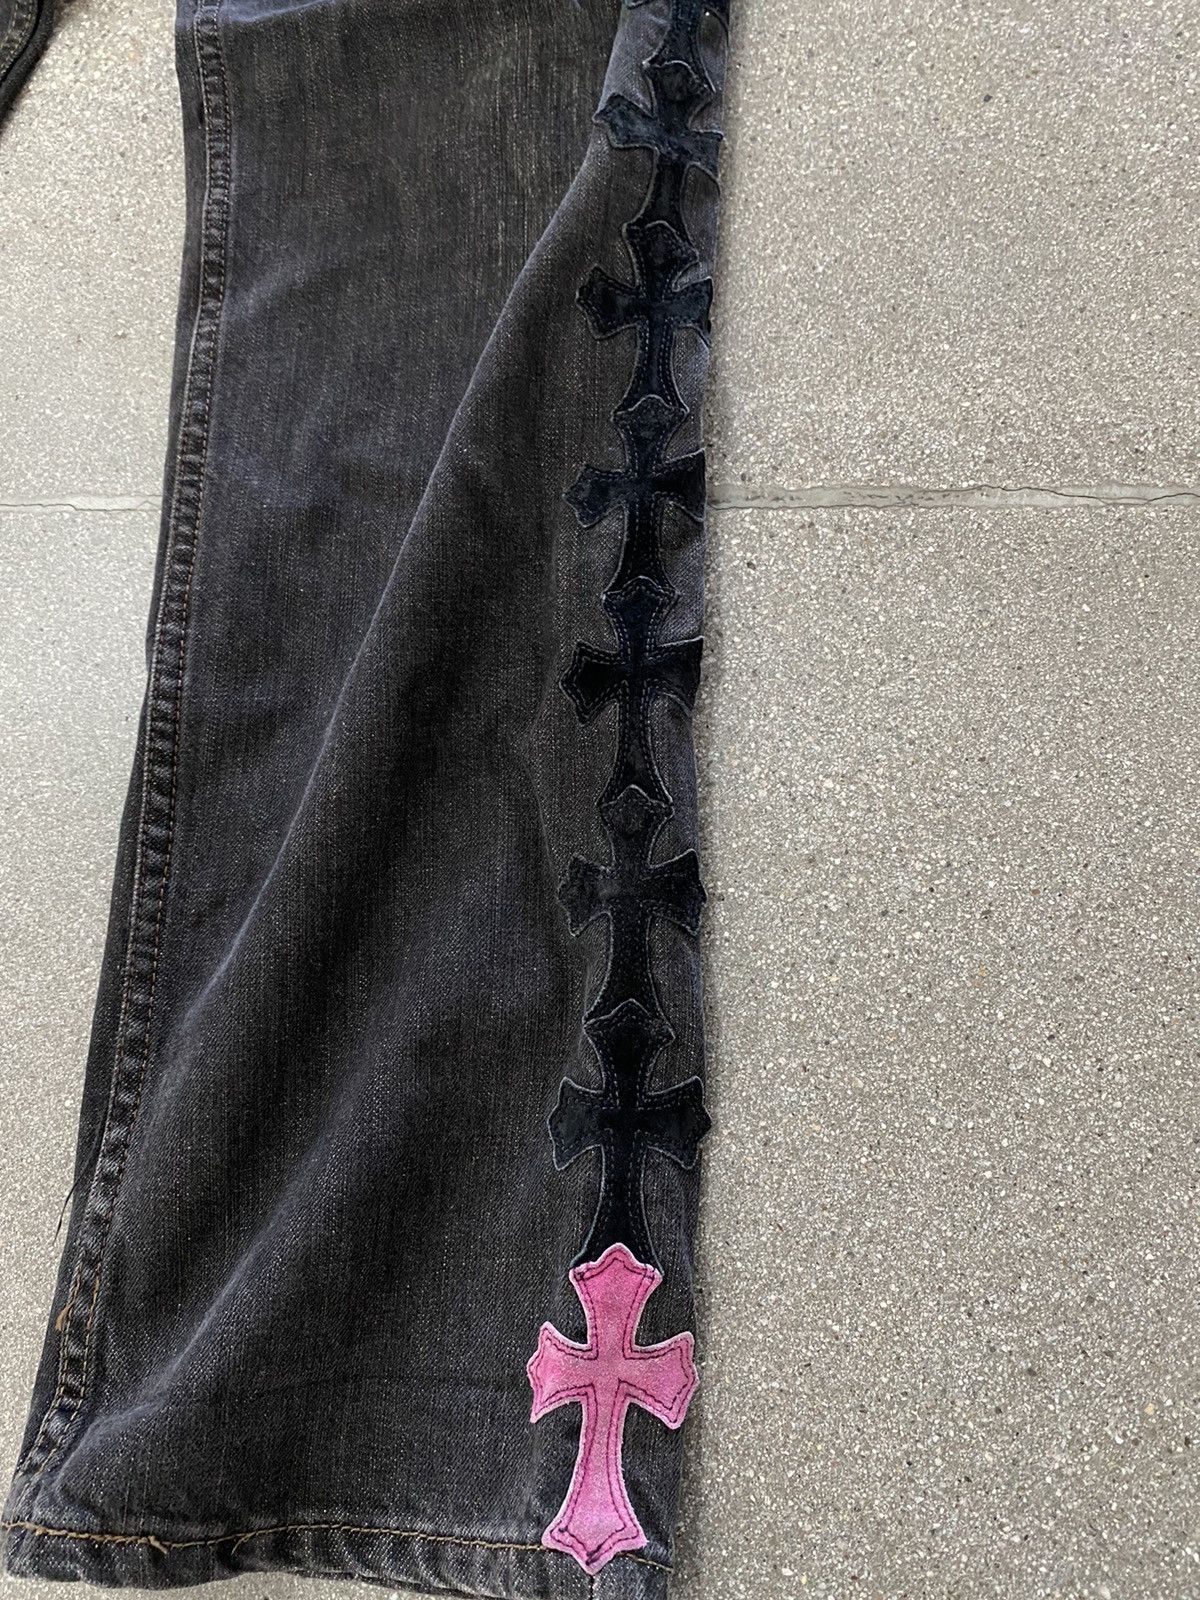 Chrome Hearts Cross Patch Denim Jeans (Special Order) Size US 30 / EU 46 - 4 Thumbnail